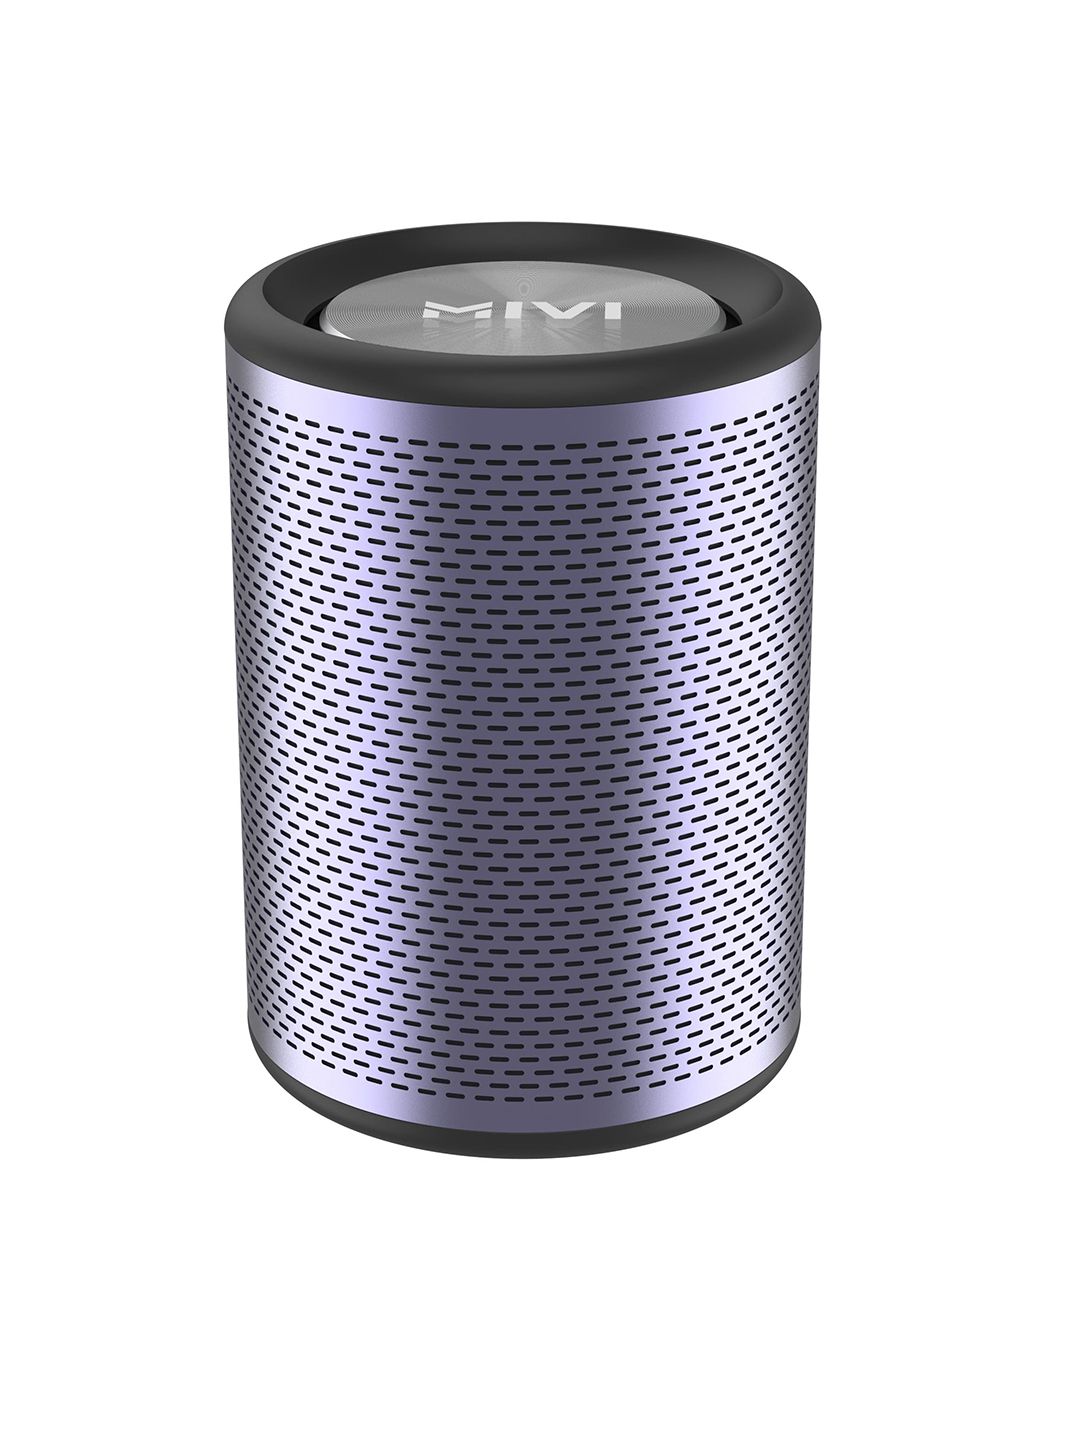 Mivi Octave 3 Wireless Bluetooth Speaker, 16W, (Black) Price in India